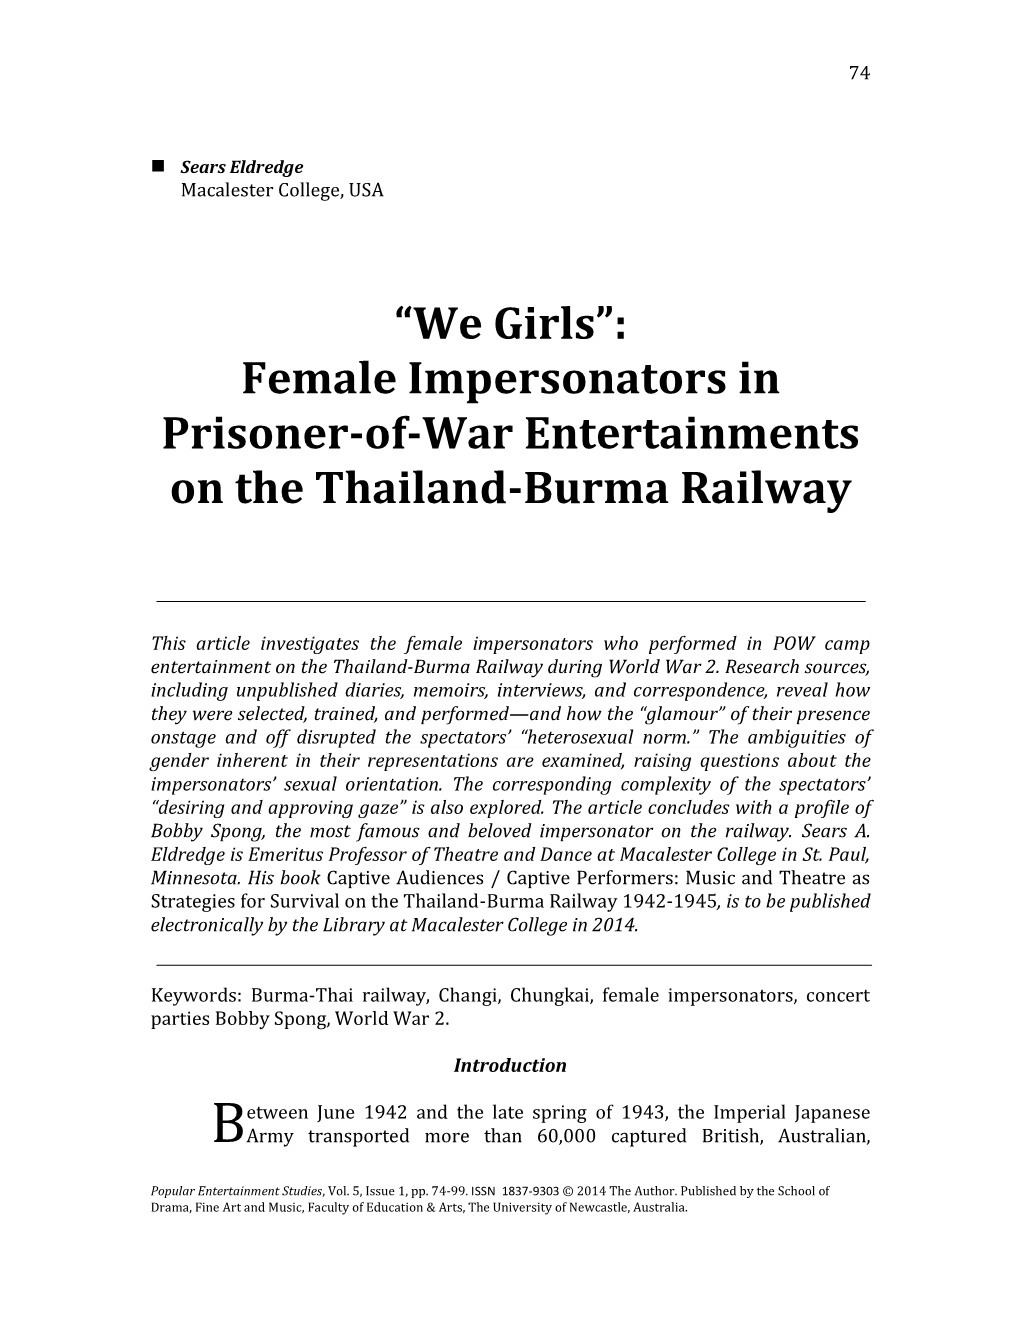 “We Girls”: Female Impersonators in Prisoner-Of-War Entertainments on the Thailand-Burma Railway